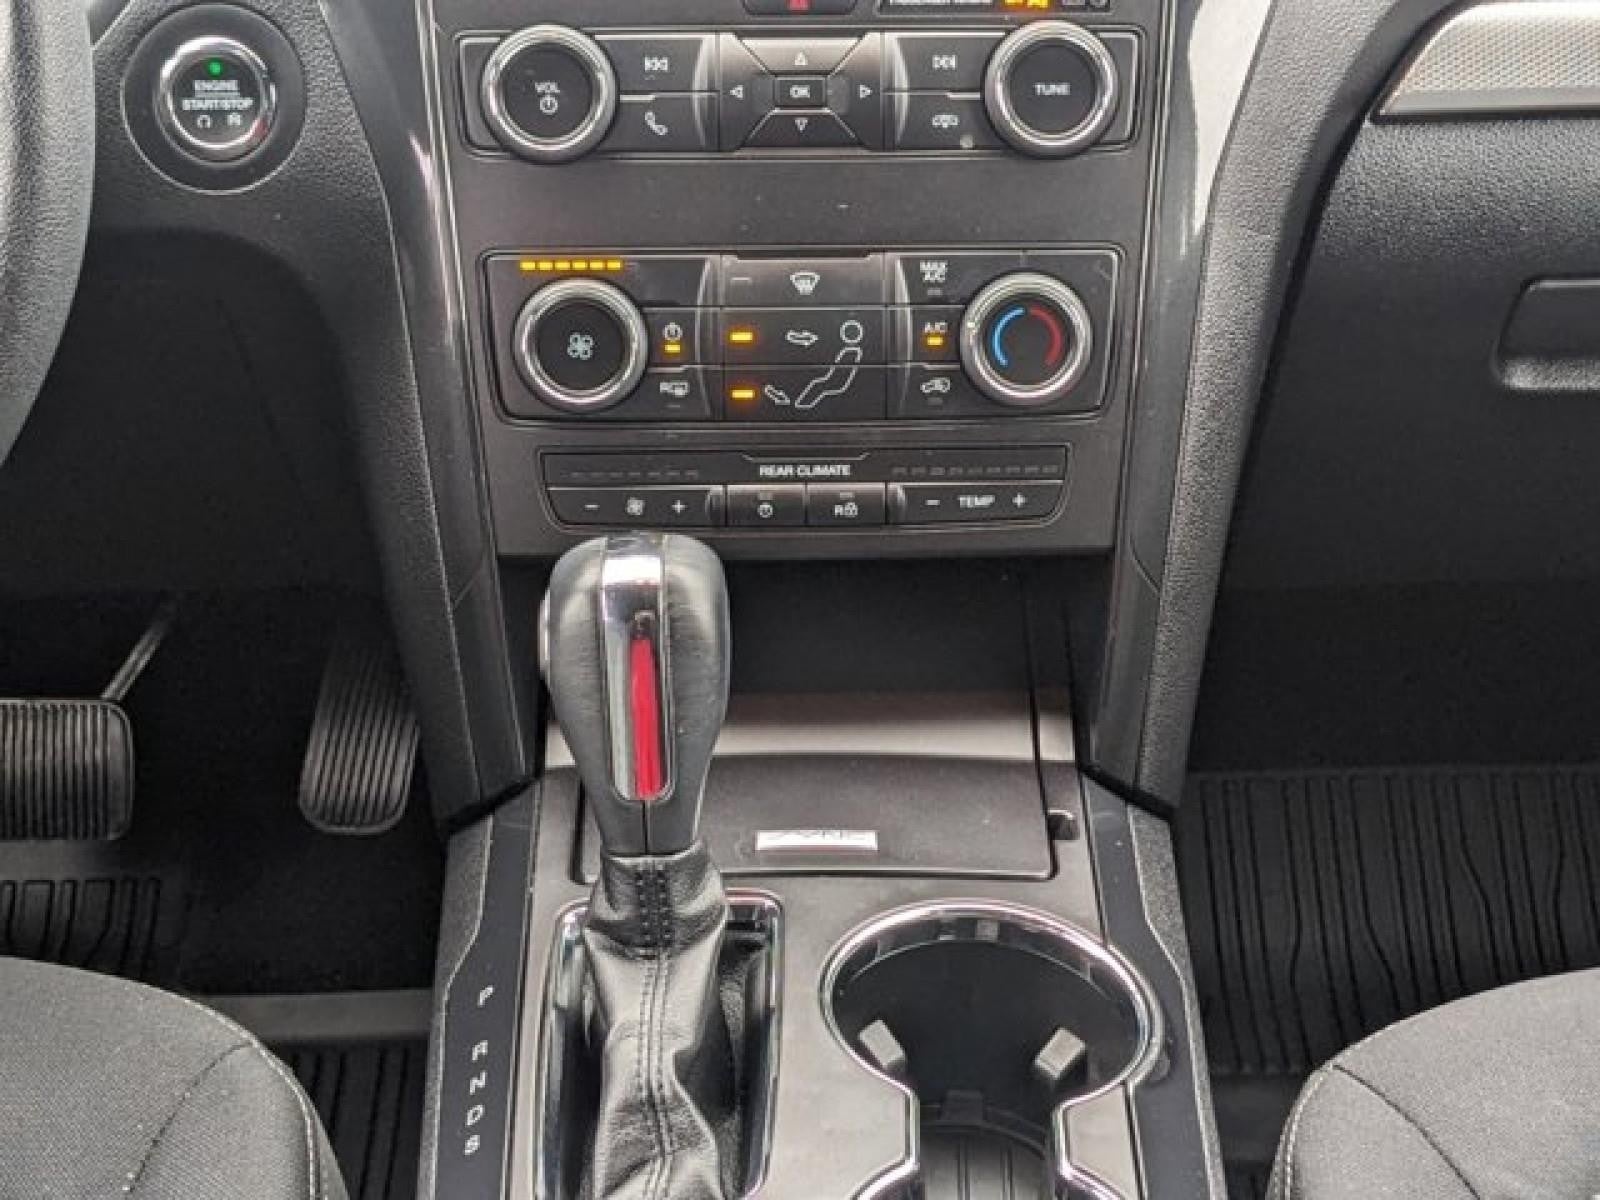 2019 Ford Explorer XLT FWD